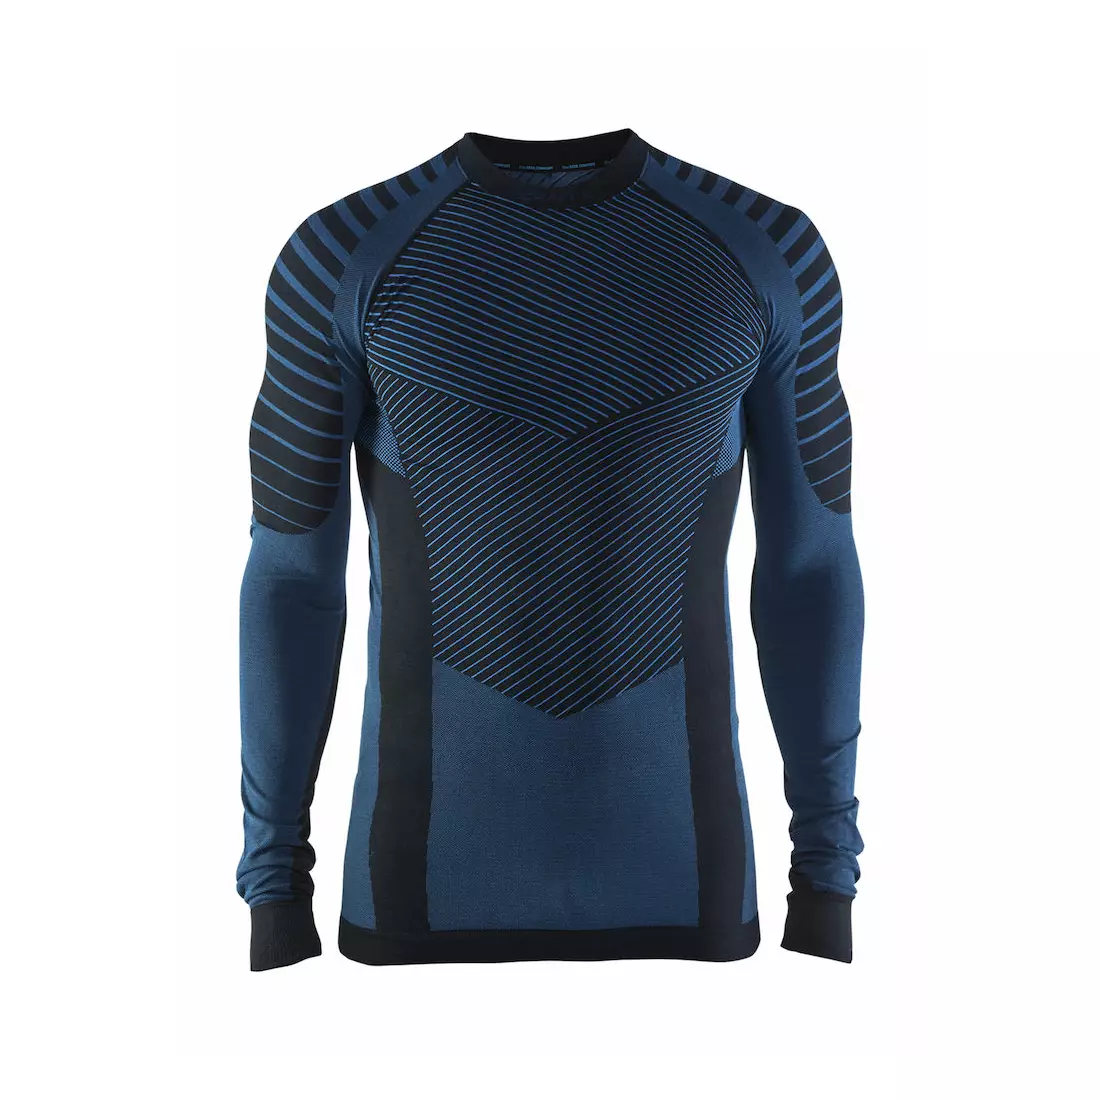 CRAFT ACTIVE INTENSITY - men's T-shirt, long sleeve thermal underwear 1905337-999336